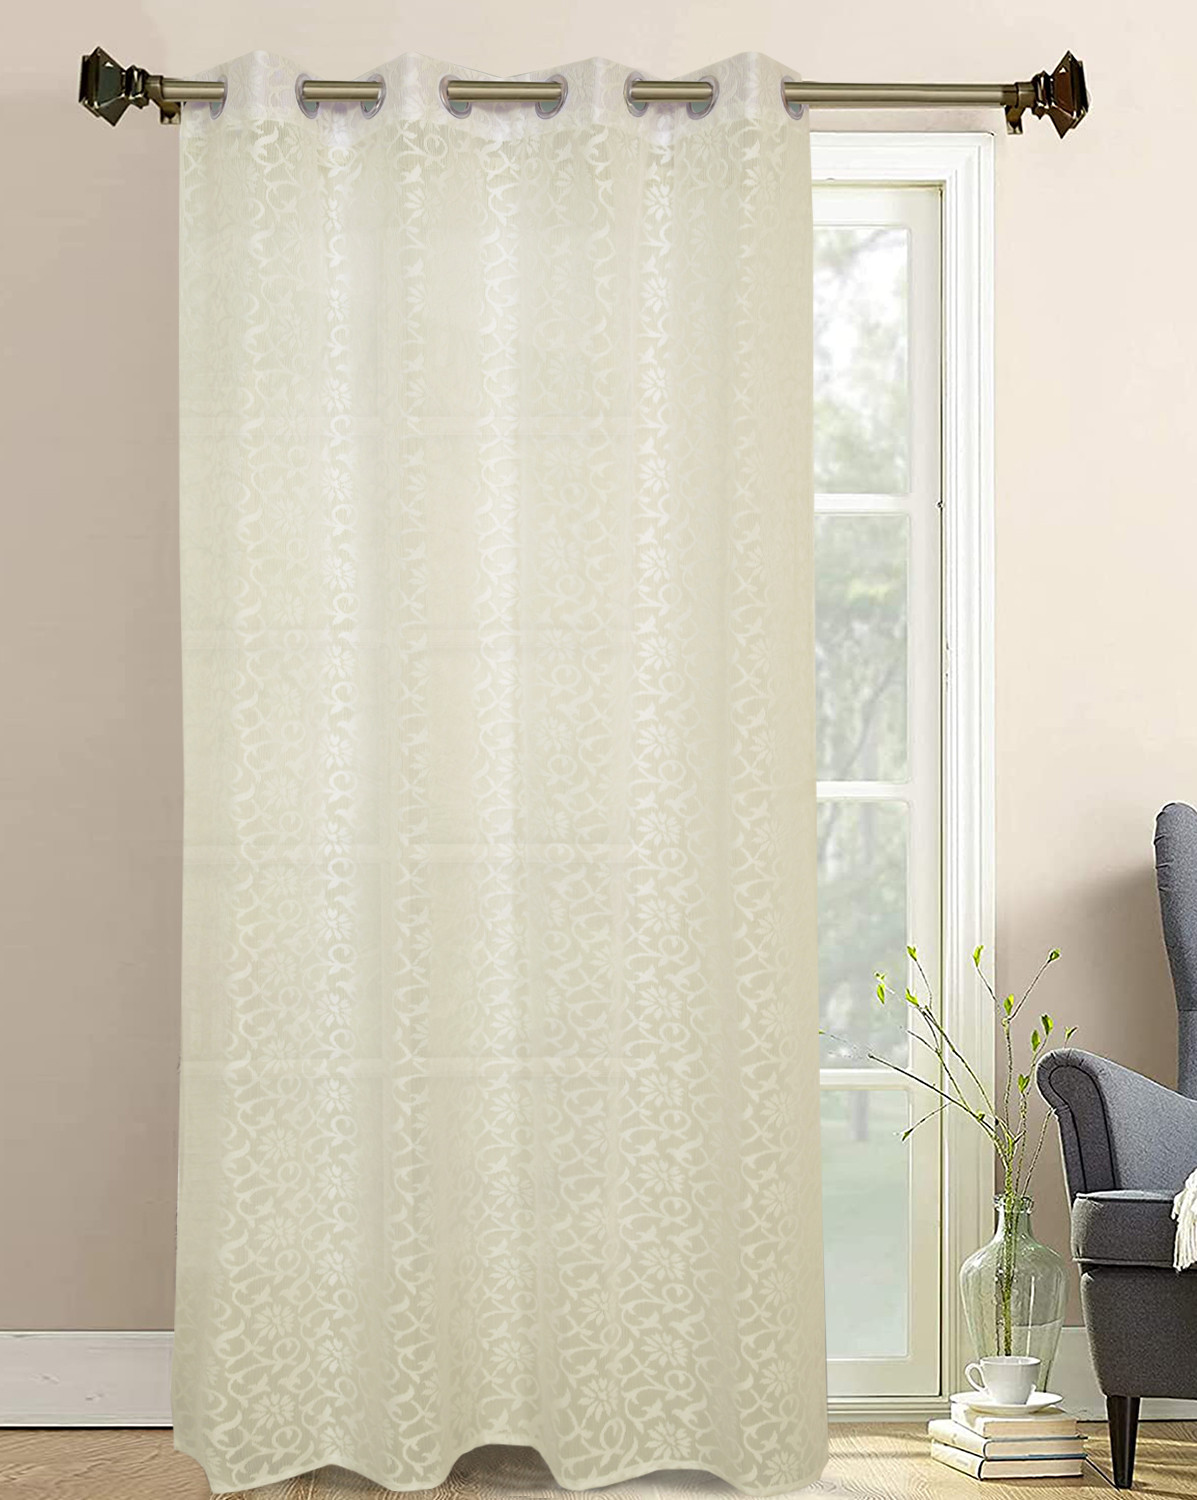 Kuber Industries Flower Design 7 Feet Door Curtain For Living Room, Bed Room, Kids Room With 8 Eyelet (Cream) 54KM3941